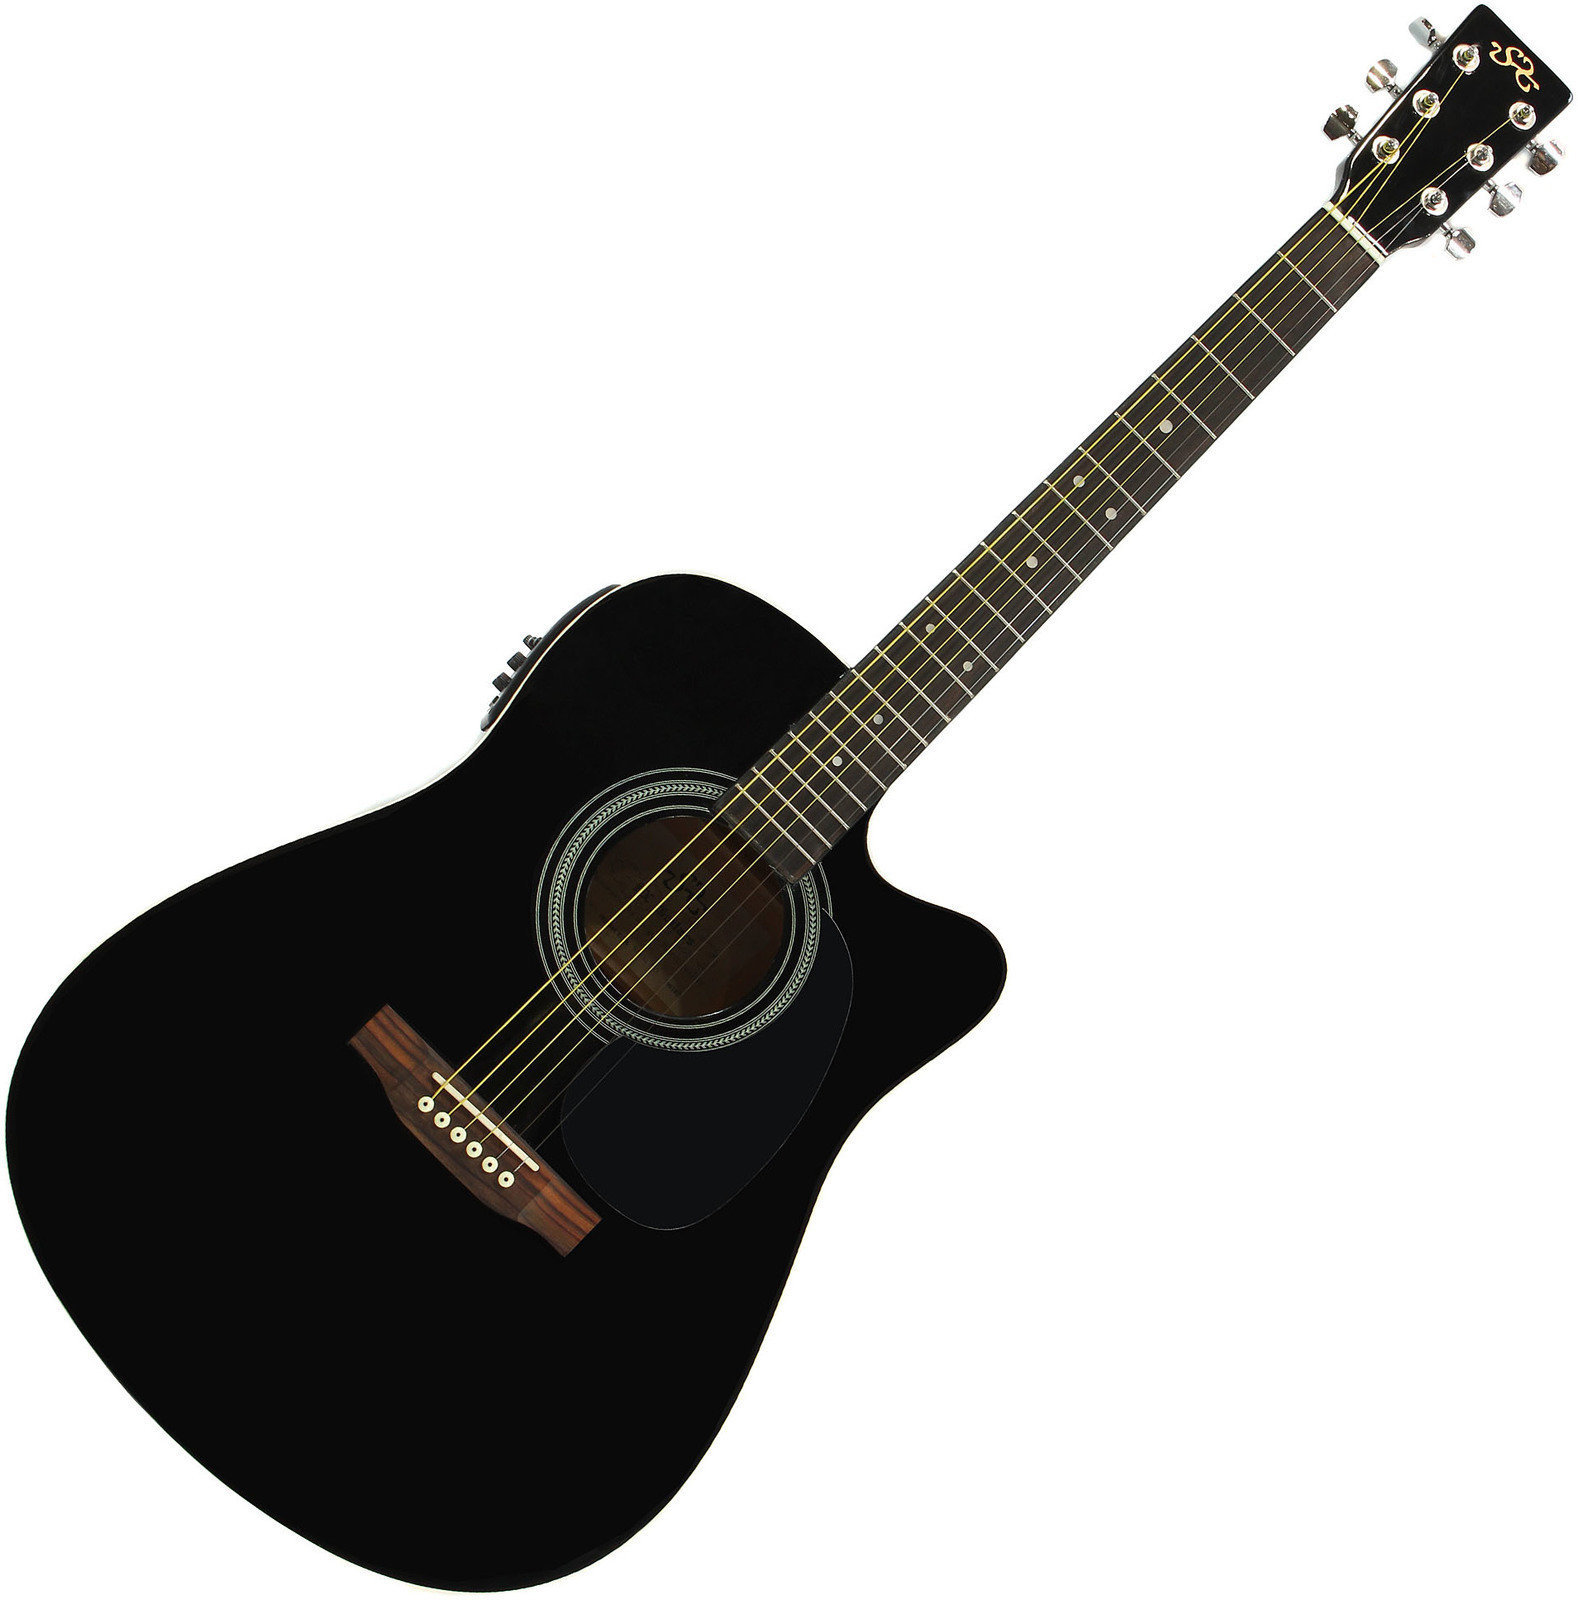 Dreadnought elektro-akoestische gitaar SX MD160-CE Black